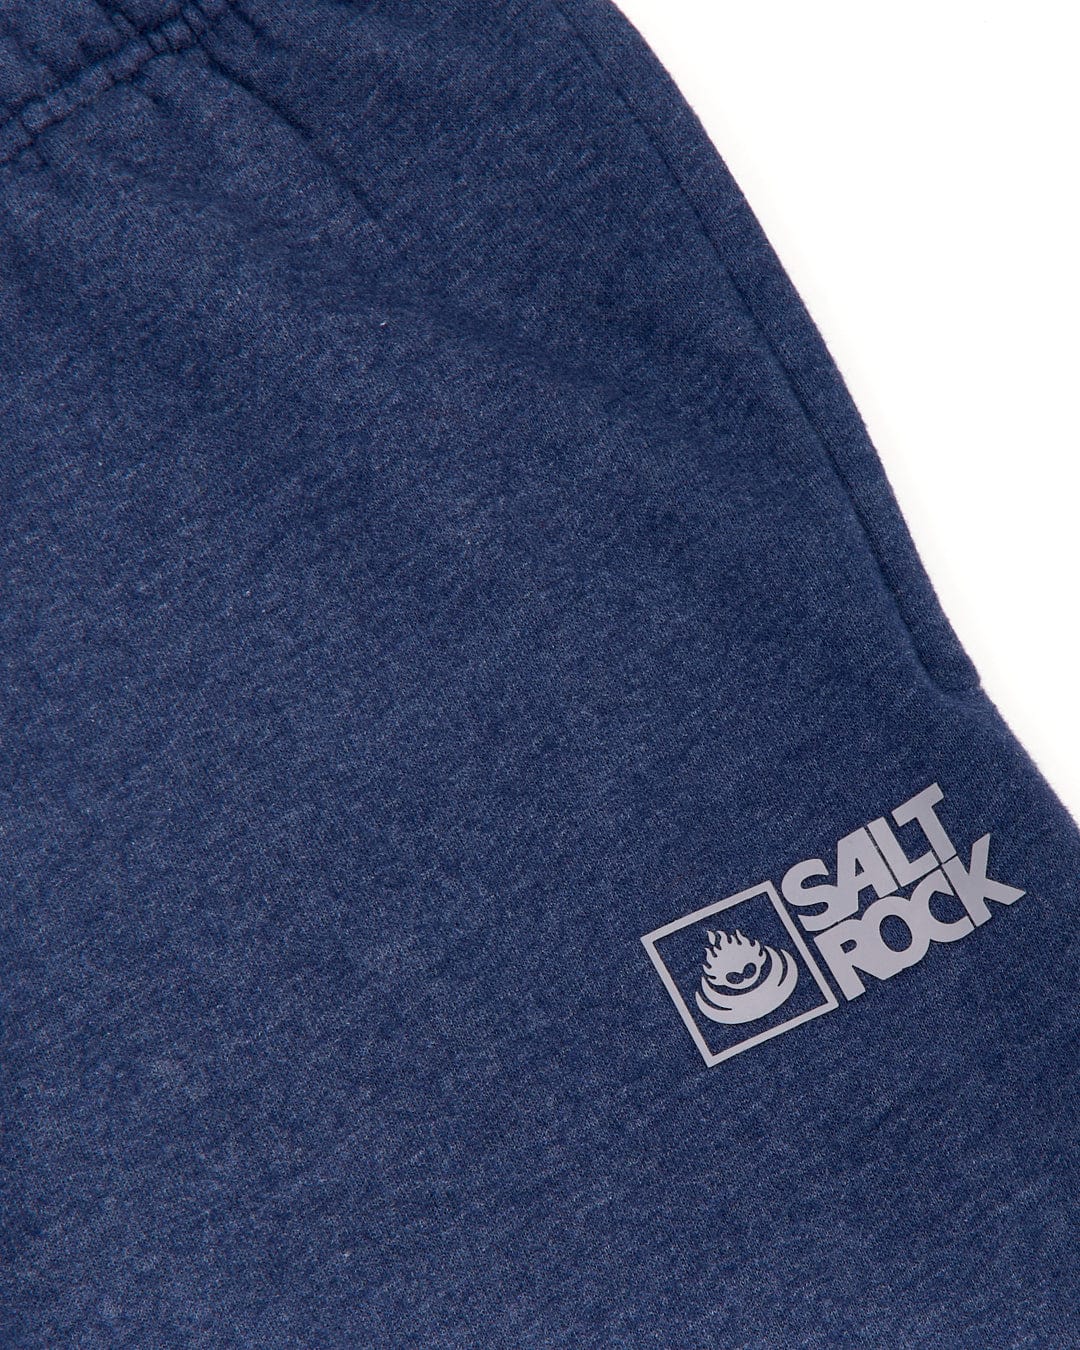 Saltrock Men's Original 20 Joggers featuring the Saltrock logo on a blue sweatpants.